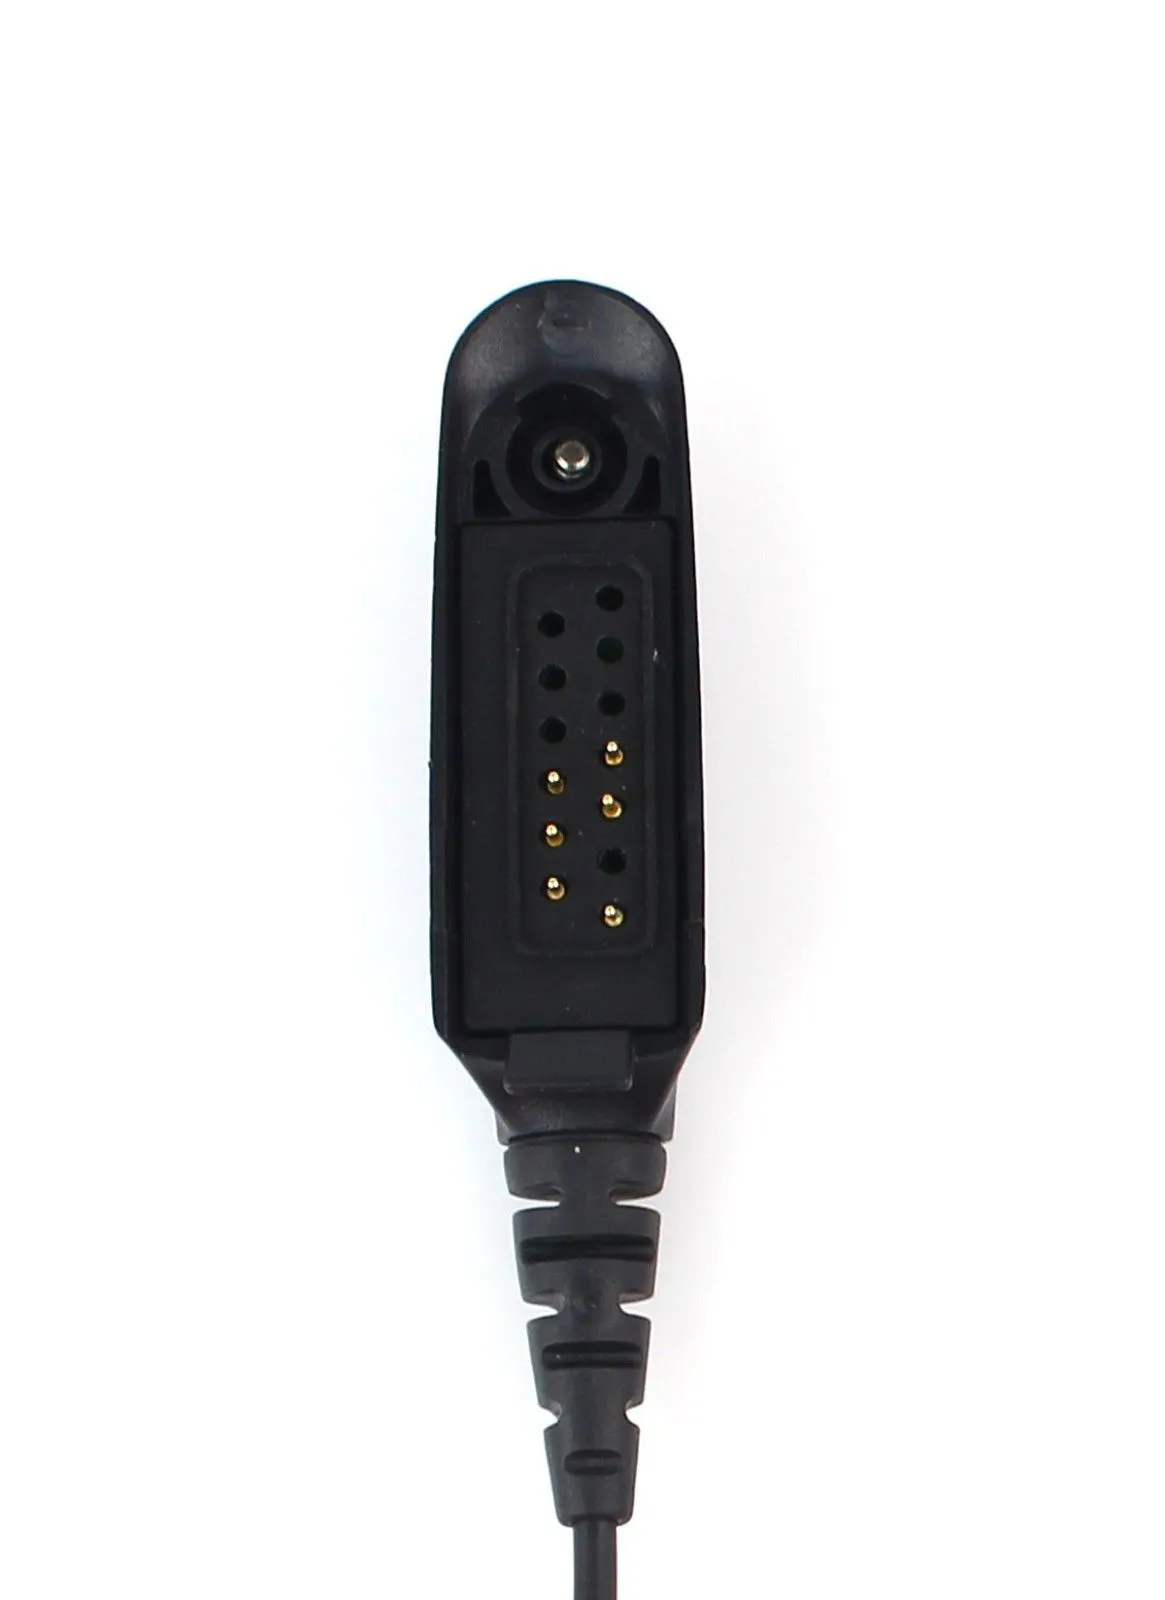 VOX PTT Auricular Auricular MIC para Motorola HT750 GP328 GP329/340 GP380 Radios